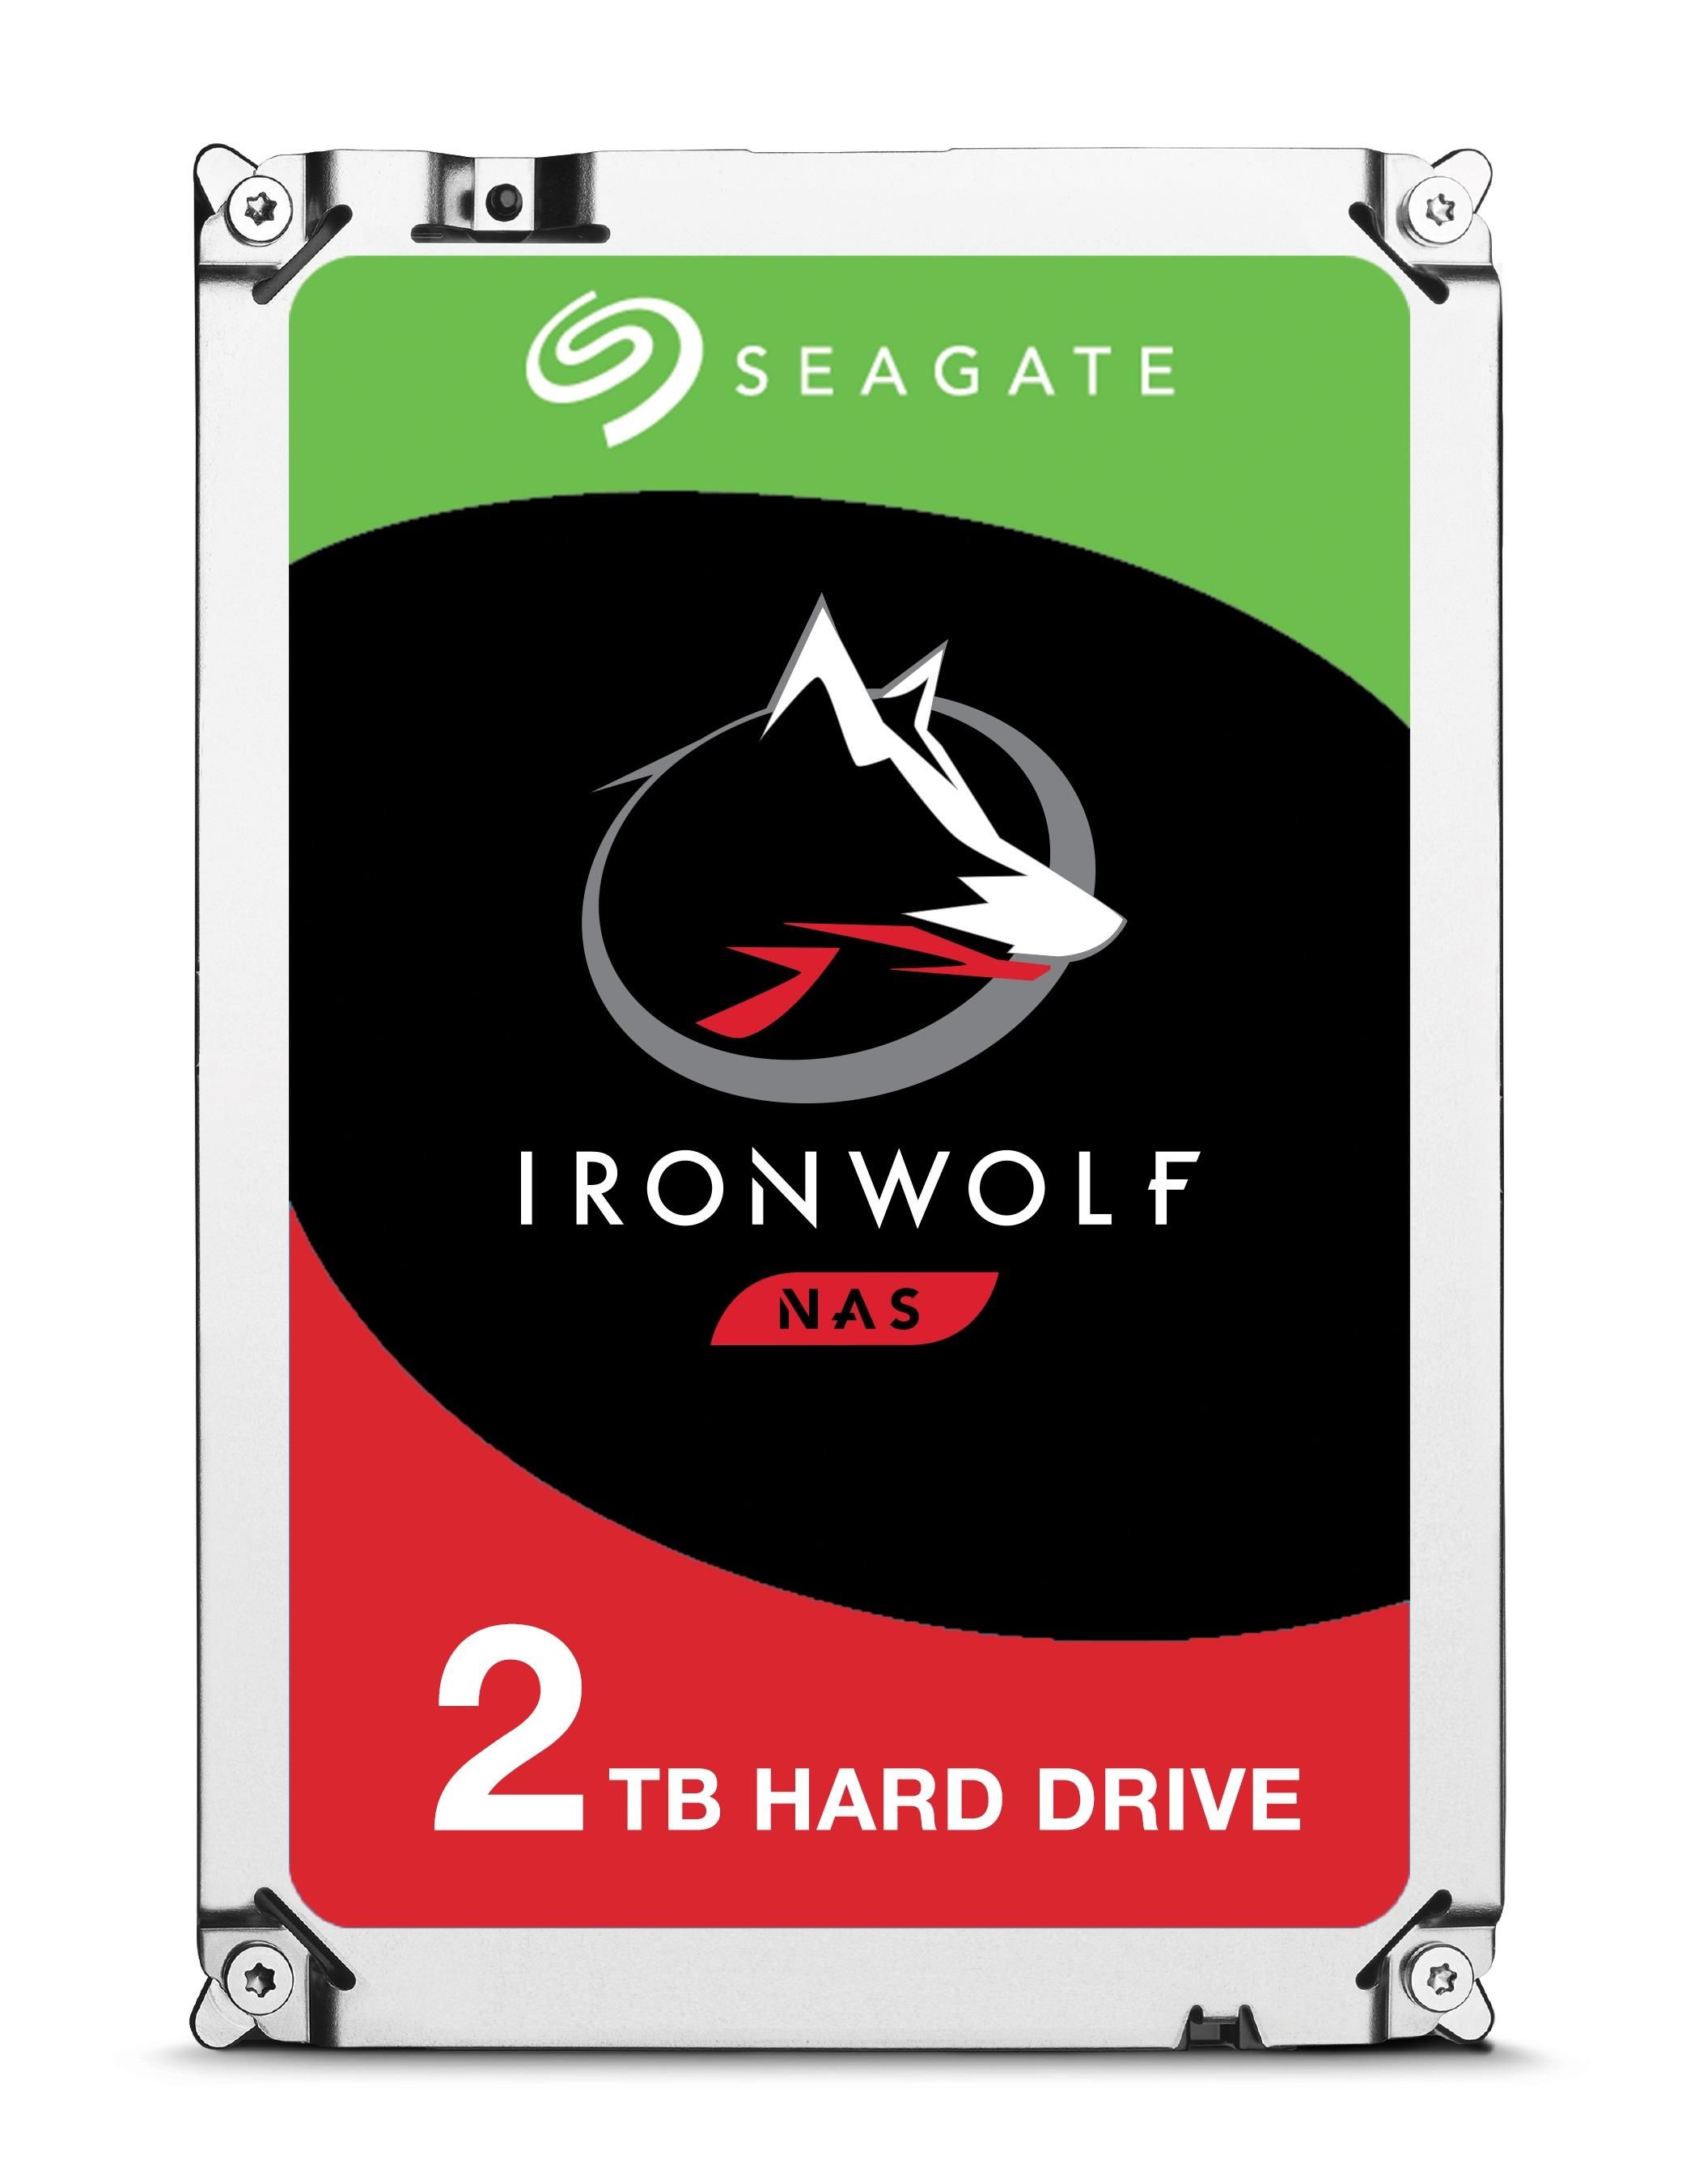 Seagate ST2000VN004 Ironwolf 2tb